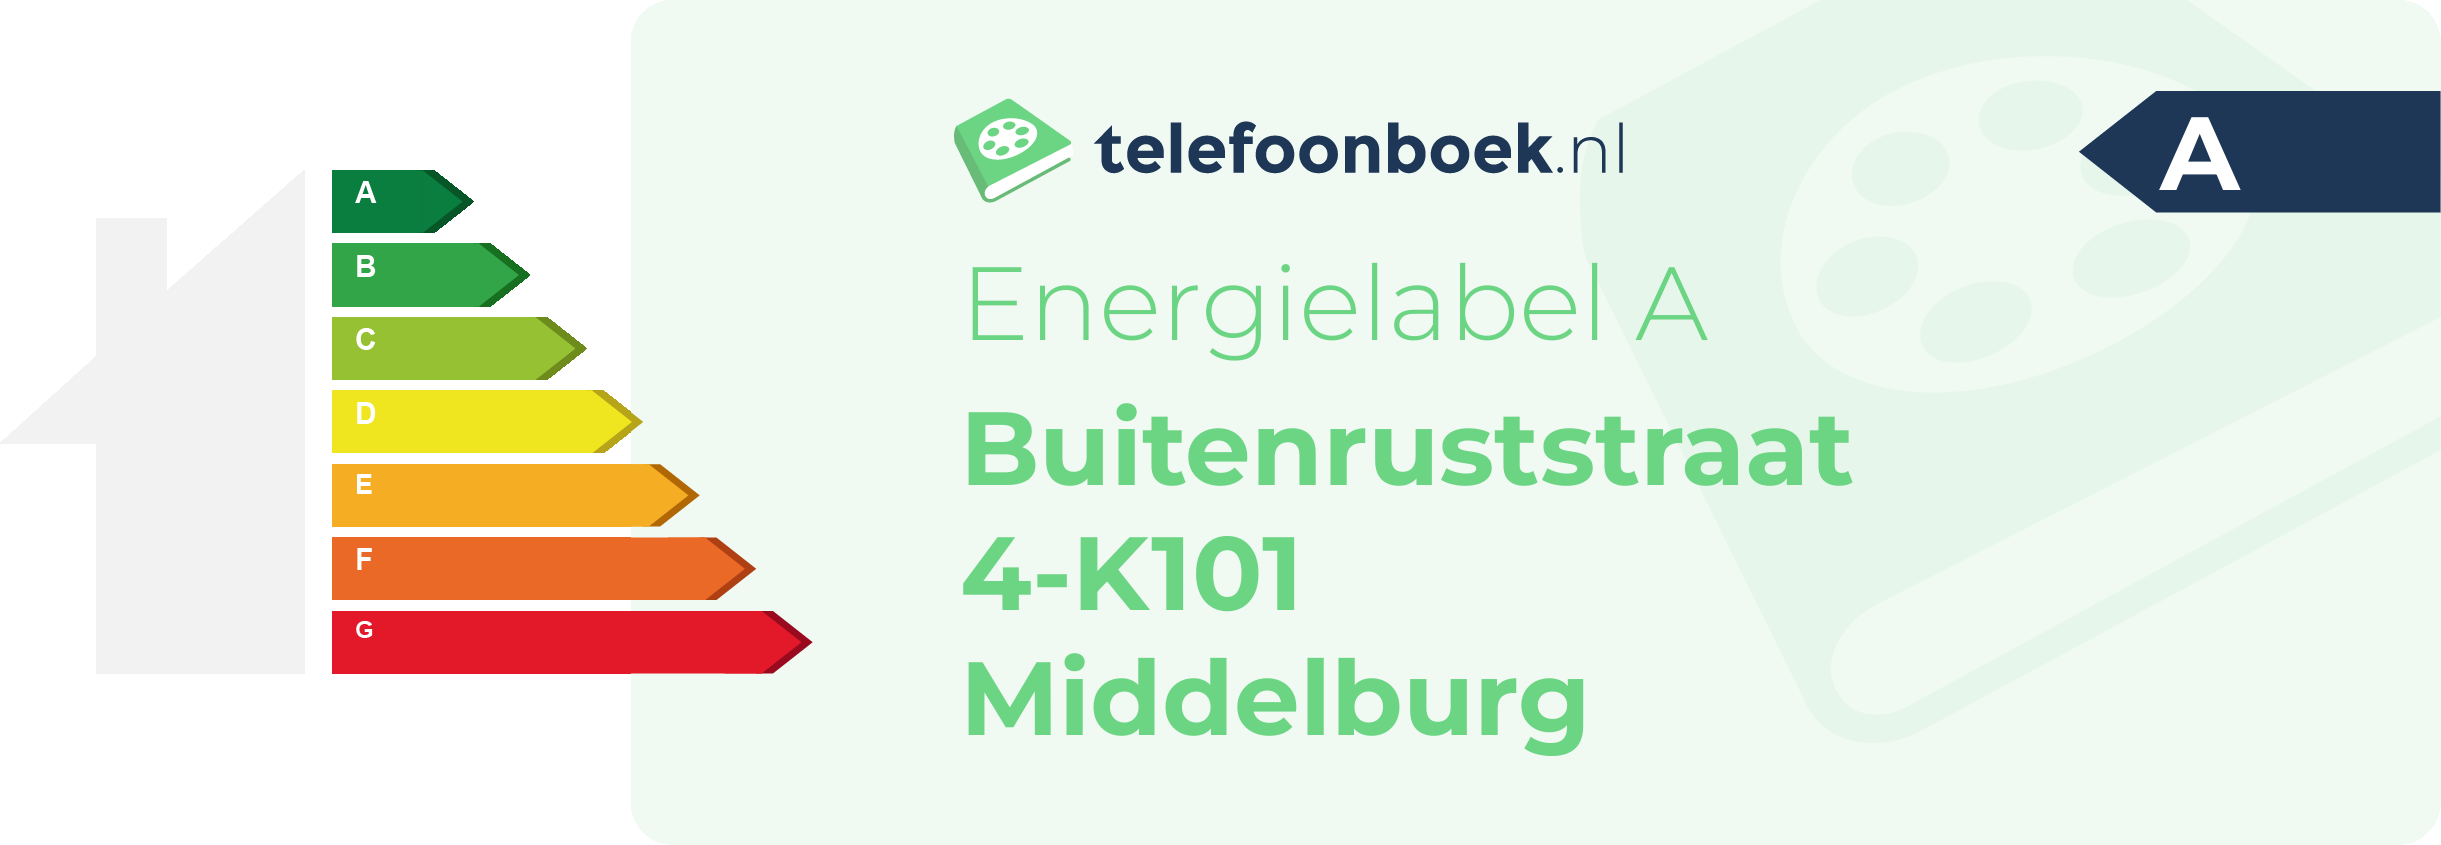 Energielabel Buitenruststraat 4-K101 Middelburg